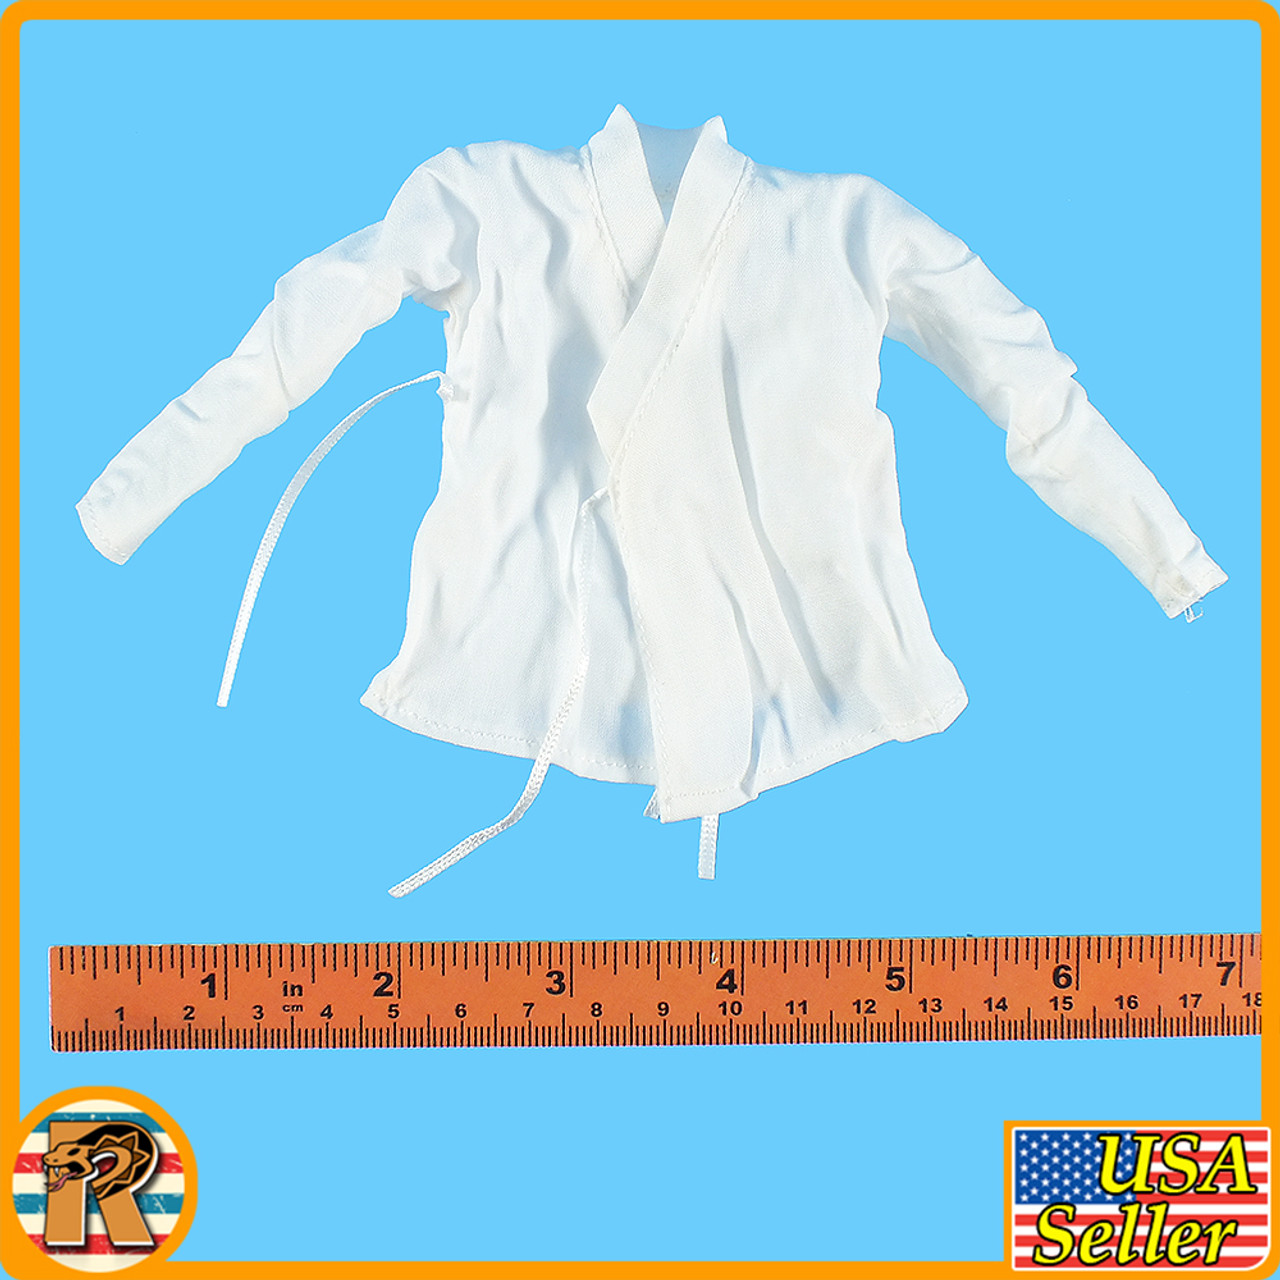 Hua Mulan - White Shirt (Female) - 1/6 Scale -